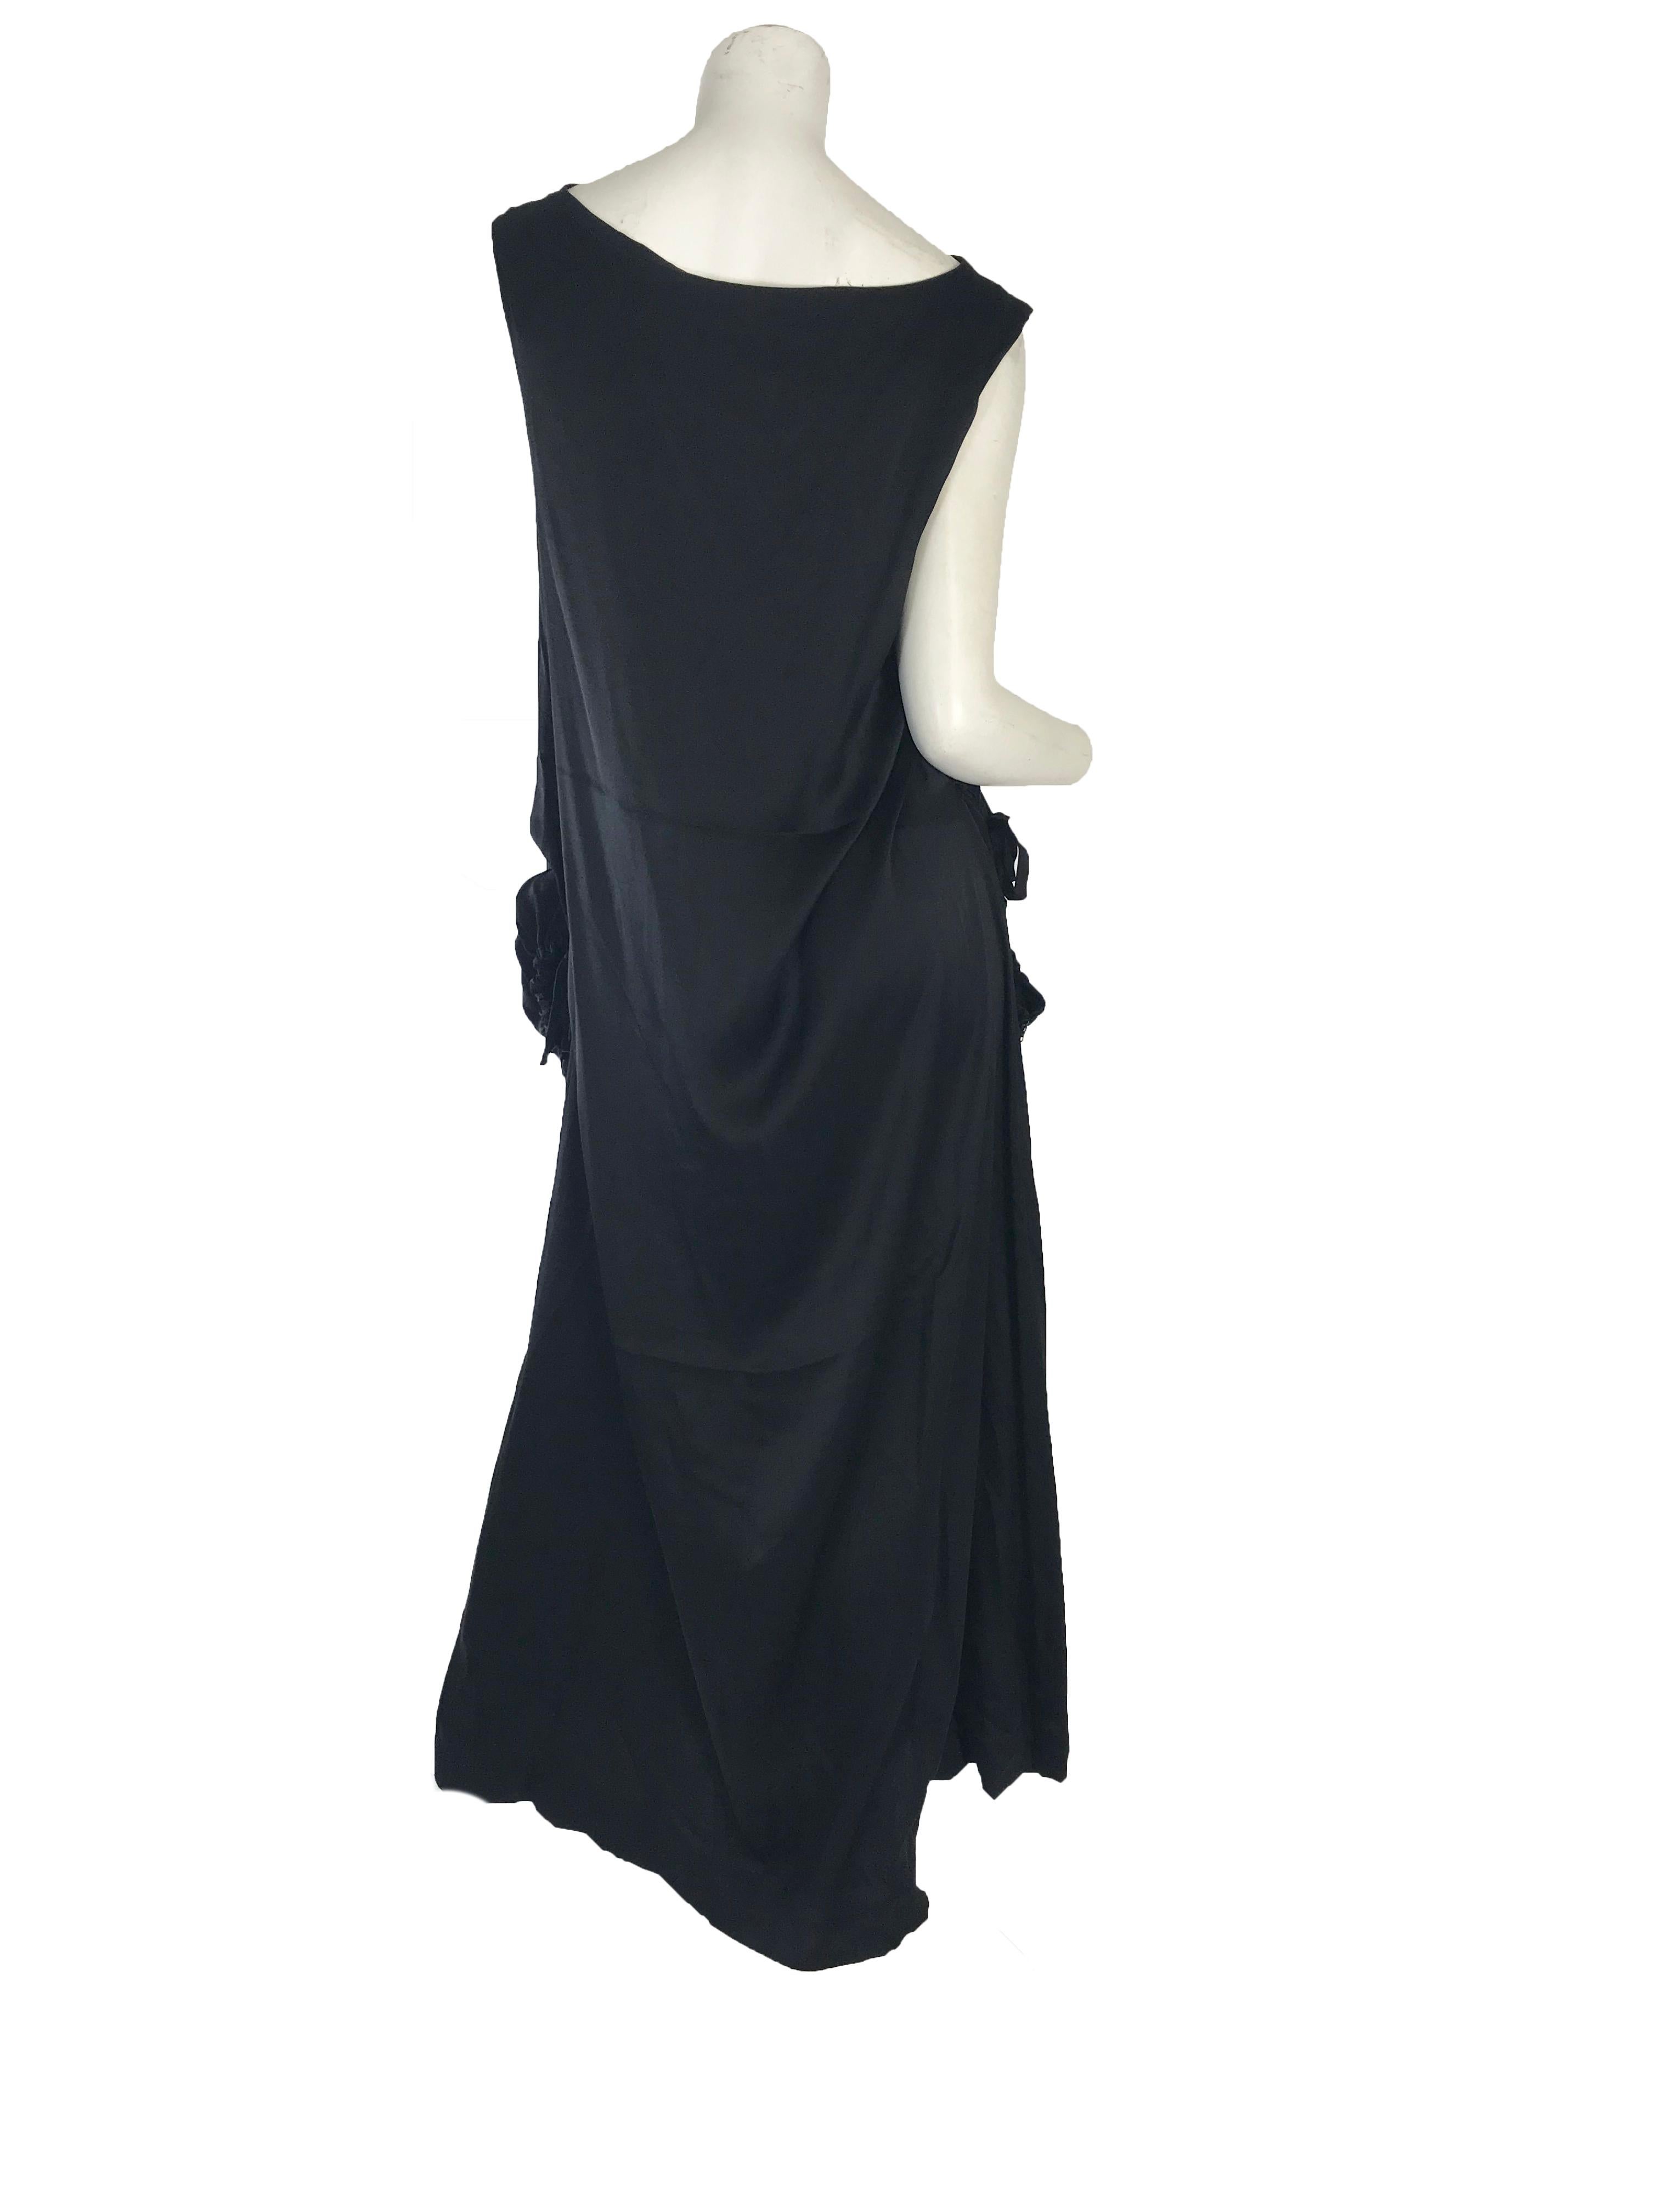 Black 1990s Yohji Yamamoto black sleeveless gown with drawstring interior pouch